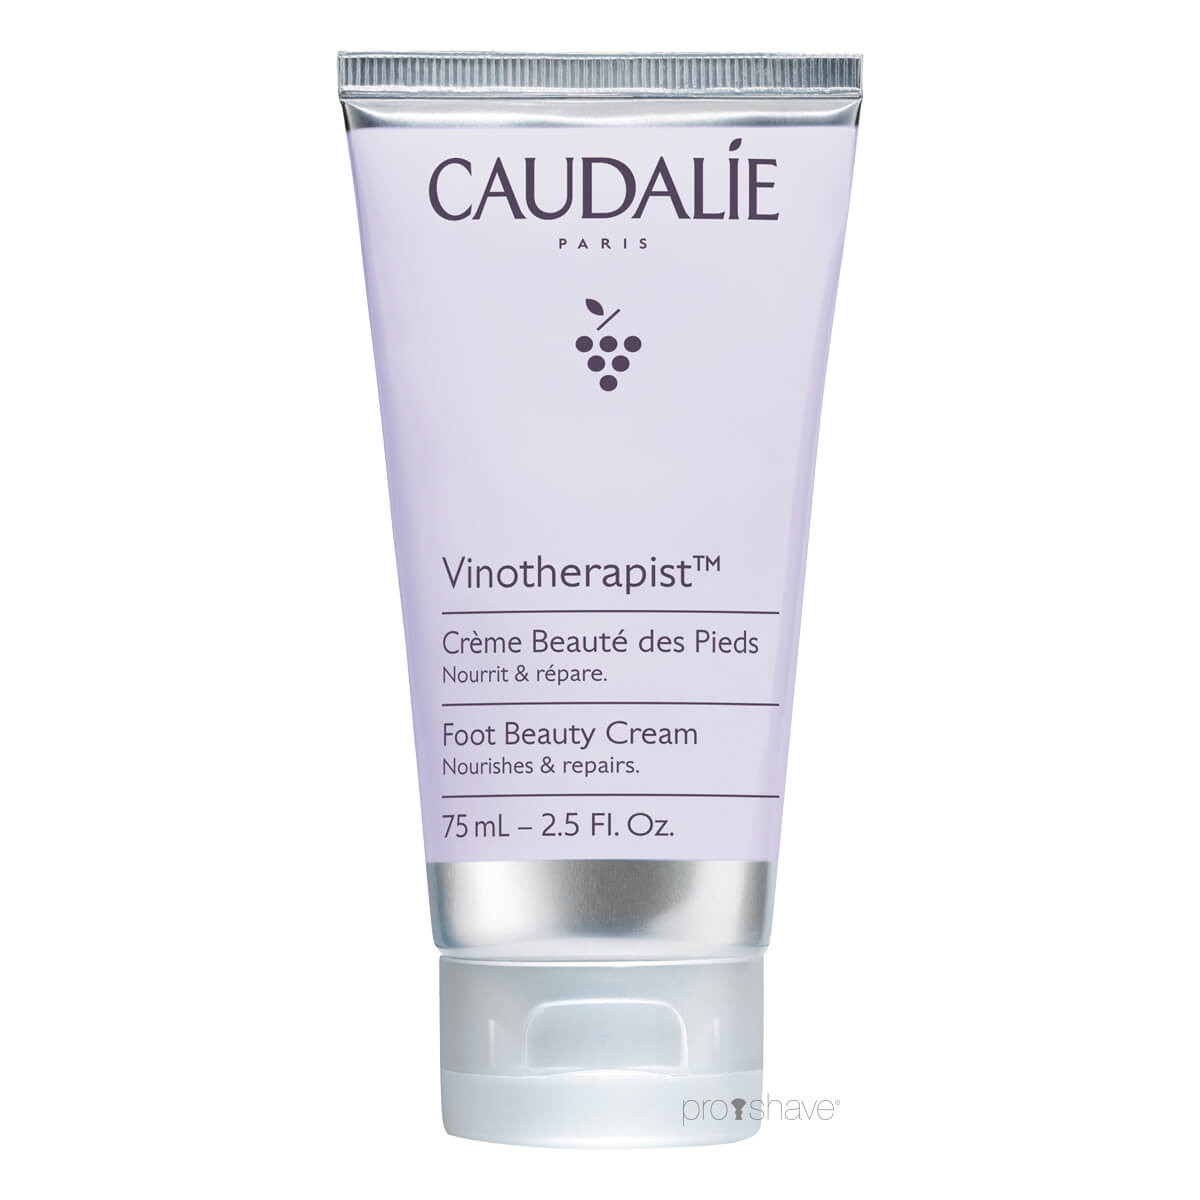 Caudalie Vinotherapist, Foot Beauty Cream, 75 ml.